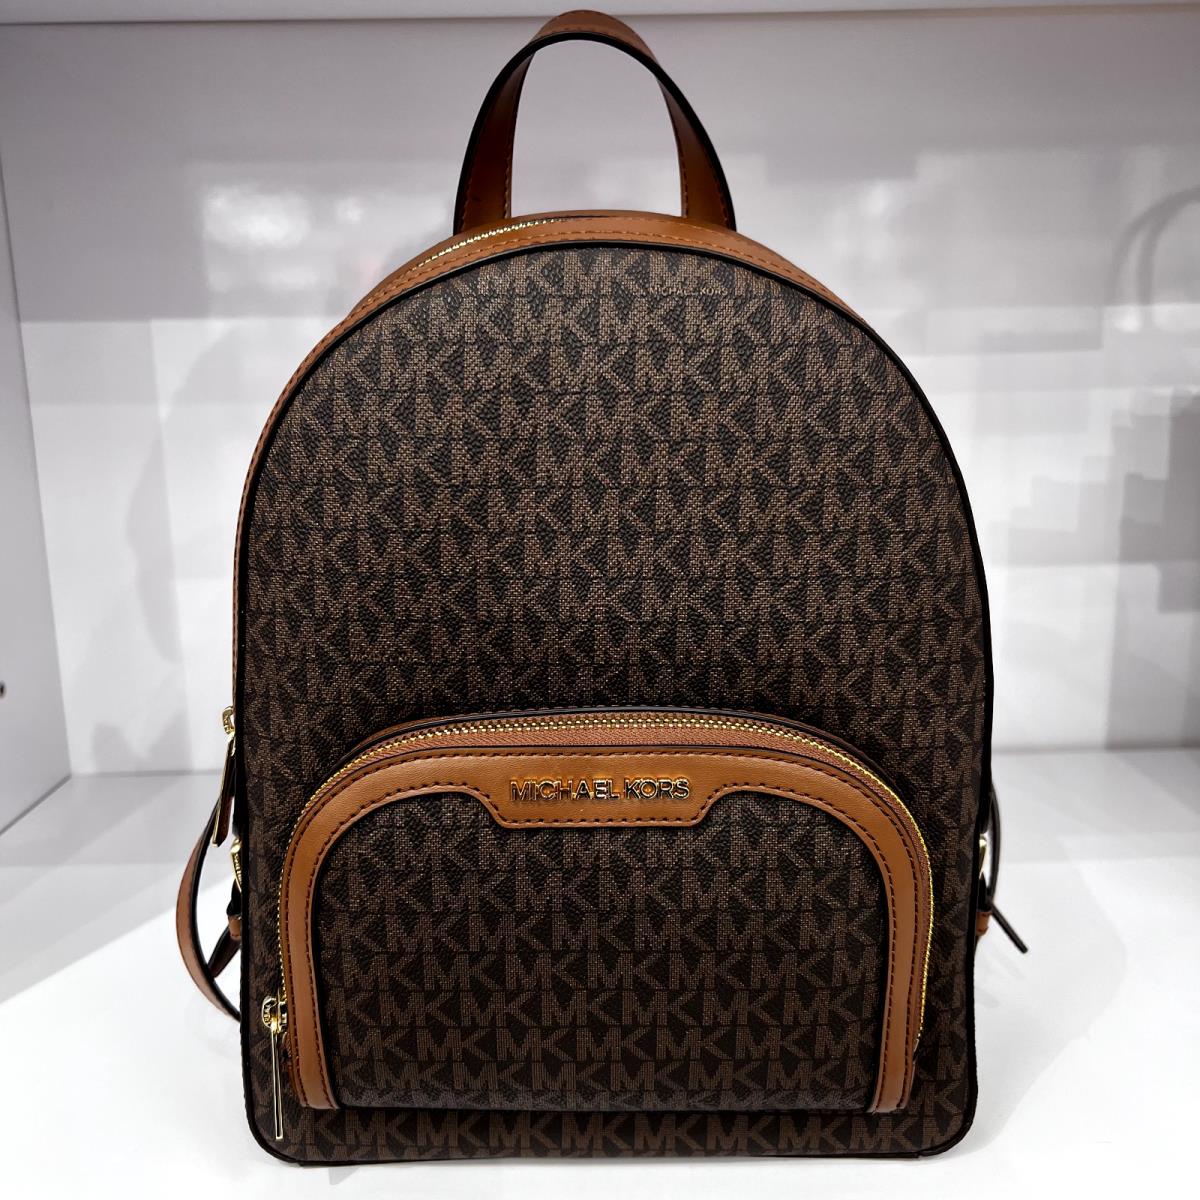 Michael Kors  bag  Jaycee - Brown Luggage Handle/Strap, Gold Hardware, Brown Exterior 0